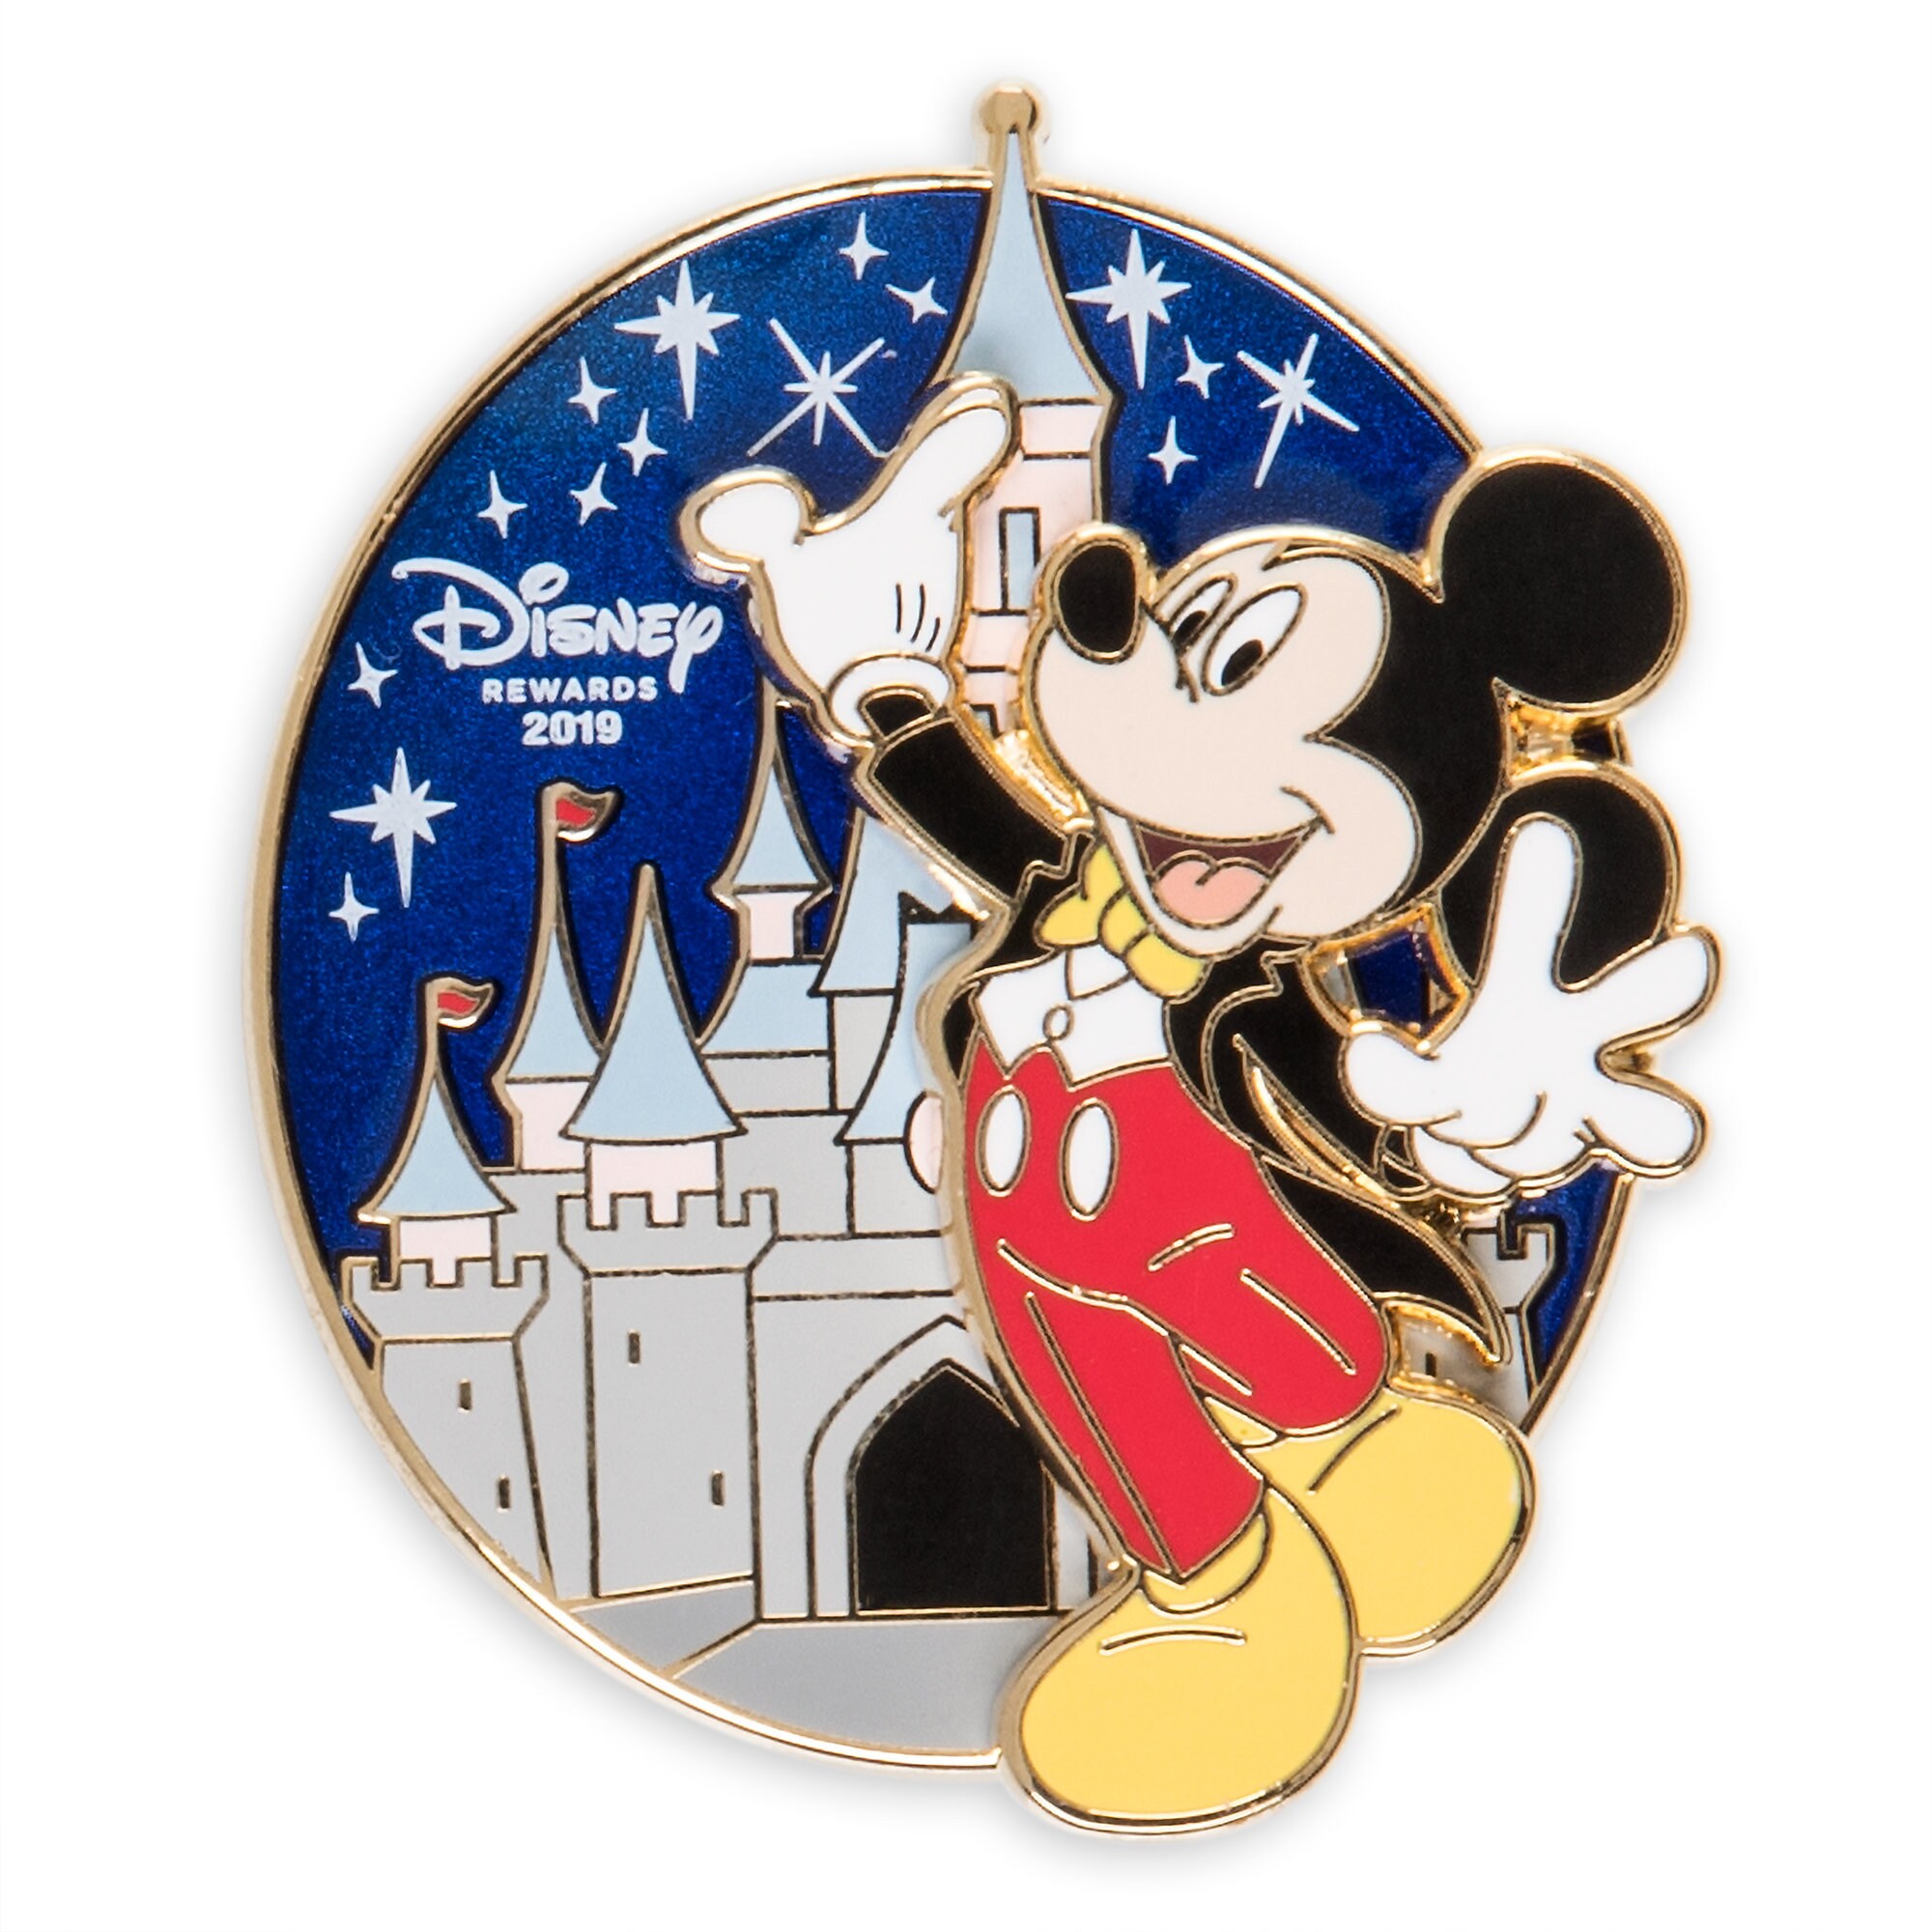 Mickey Mouse Tuxedo - Disney Rewards Cardmember Pin 2019